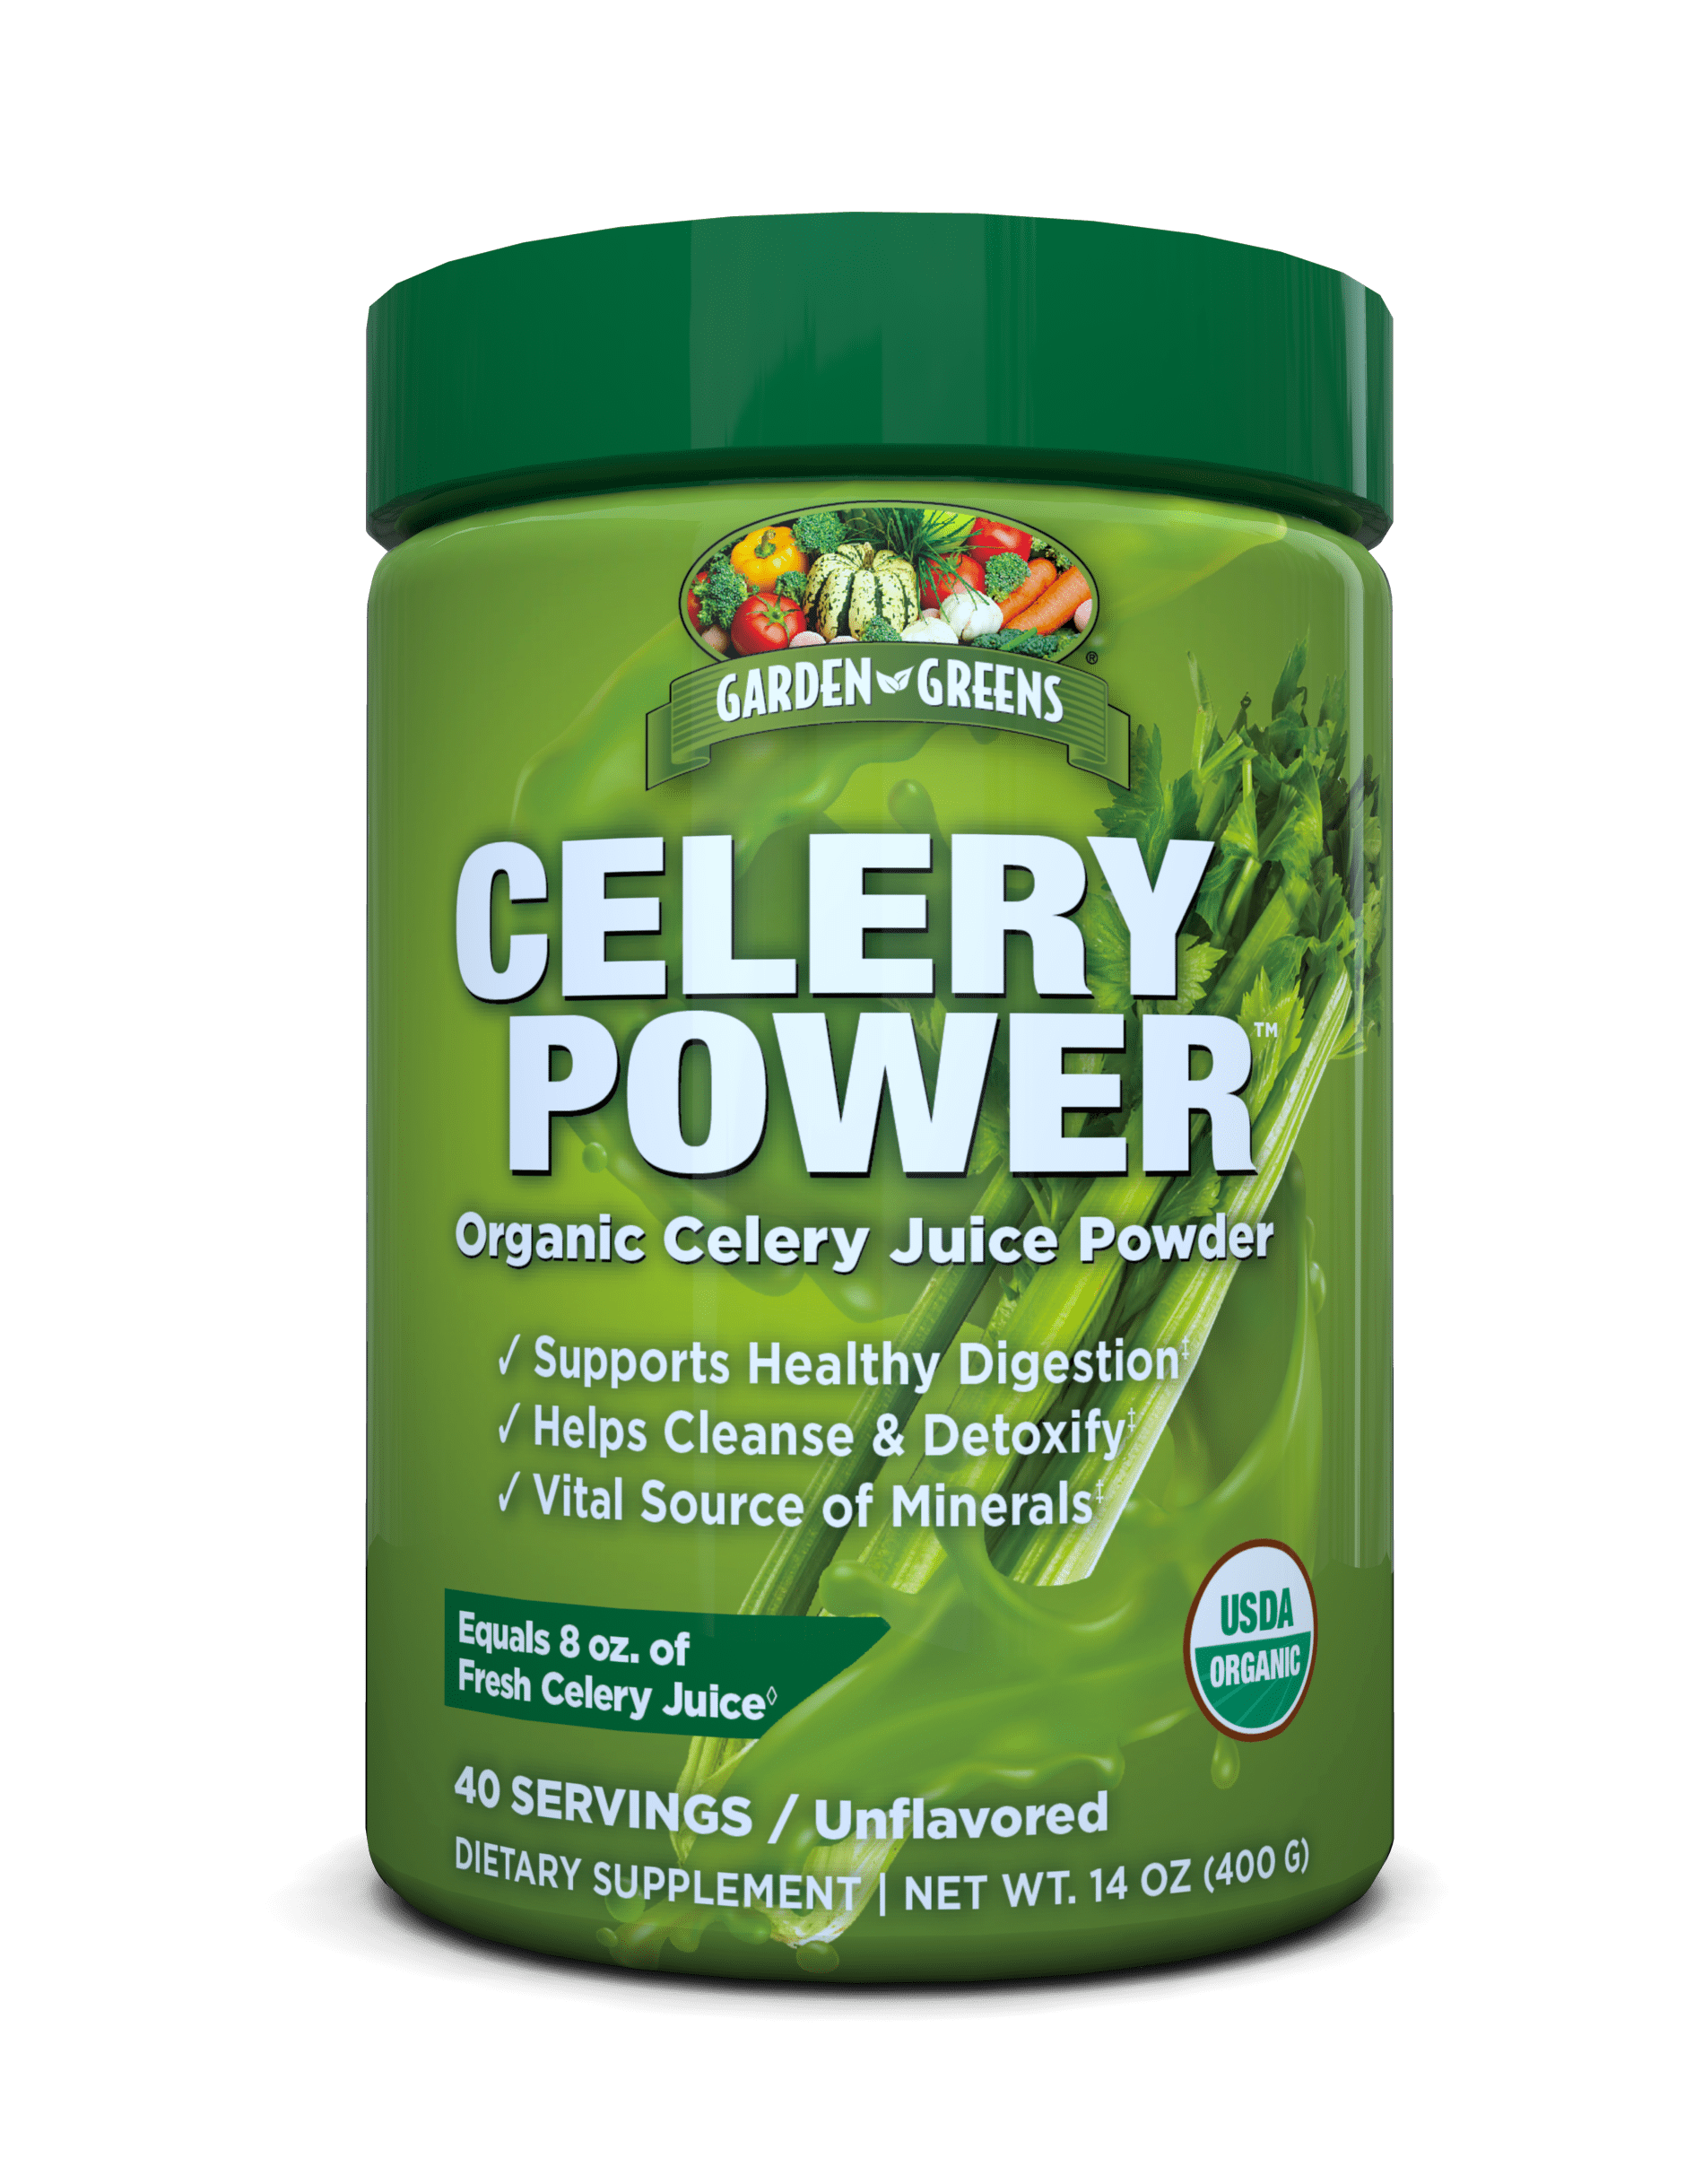 Garden Greens Celery Power Organic Celery Juice Powder, Unflavored